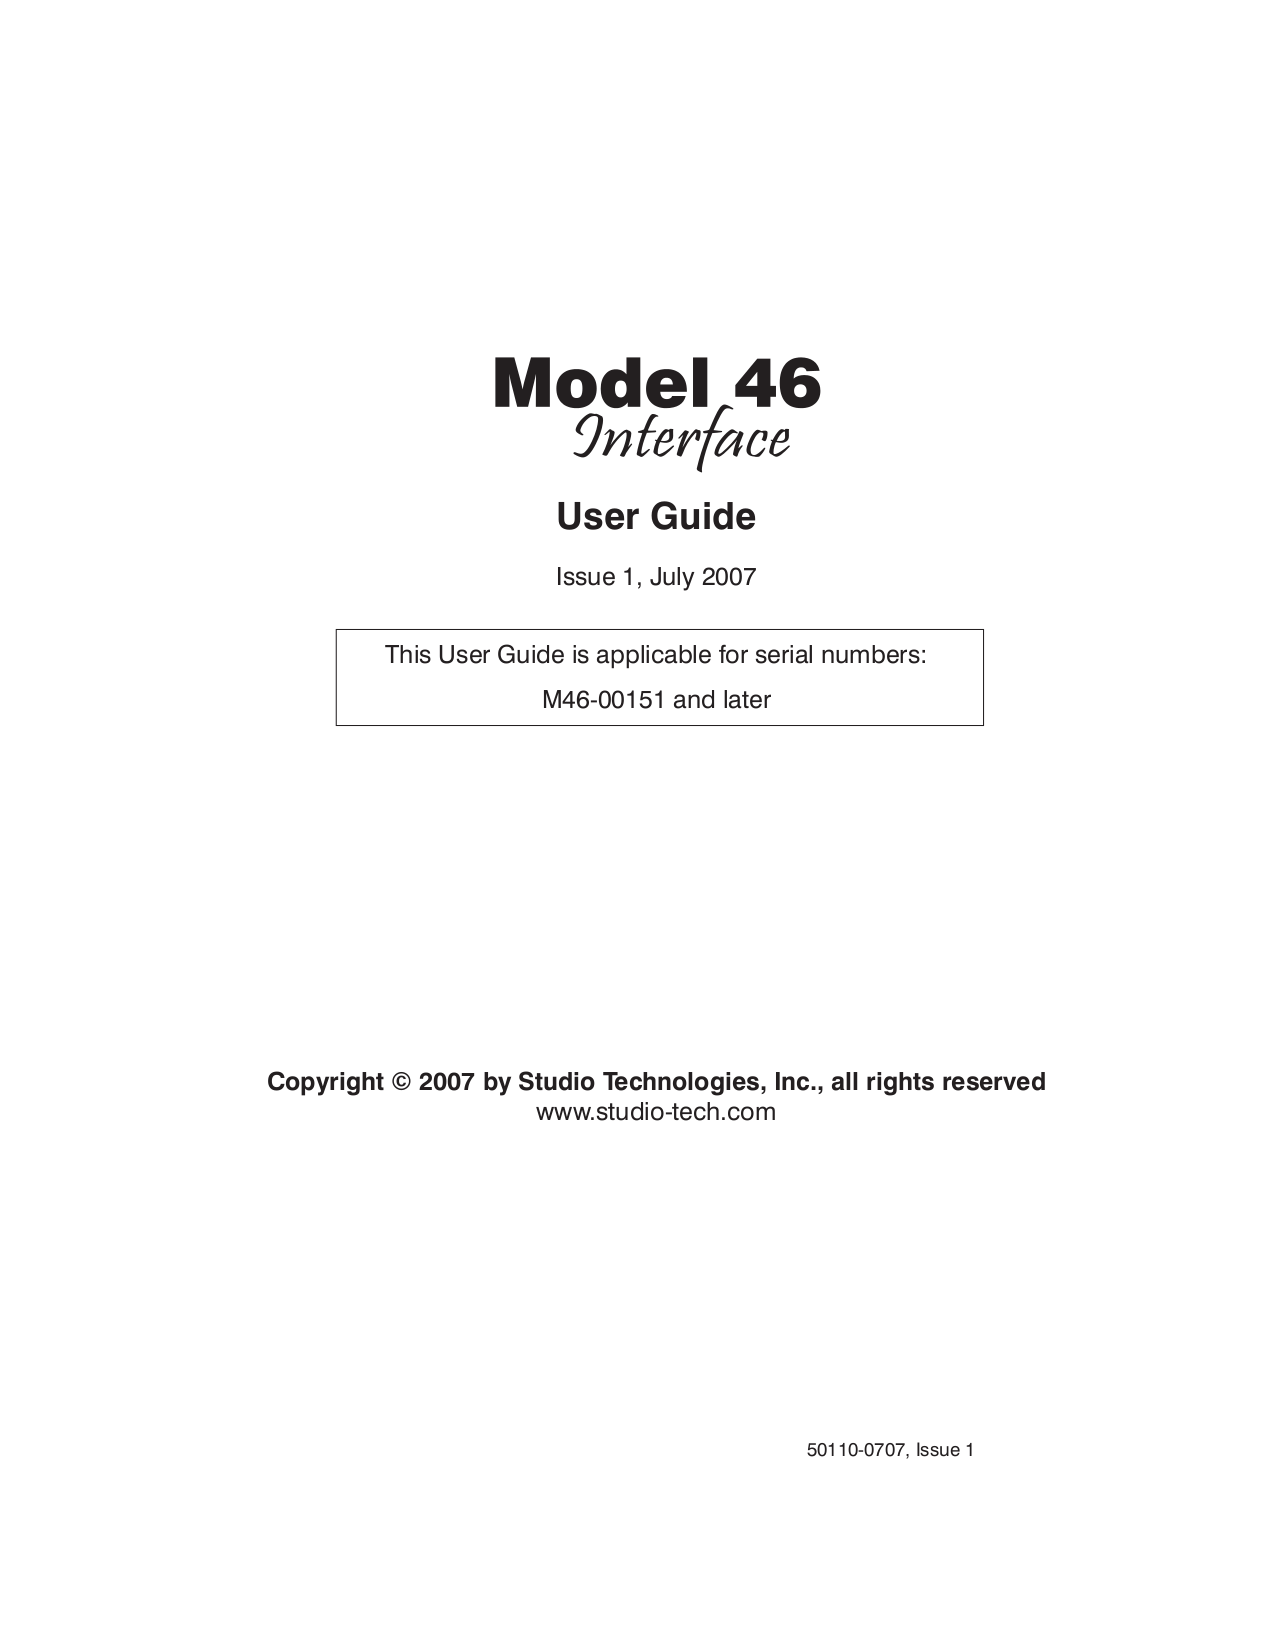 pdf for Telex Other RVON-8 IntercomSystem manual